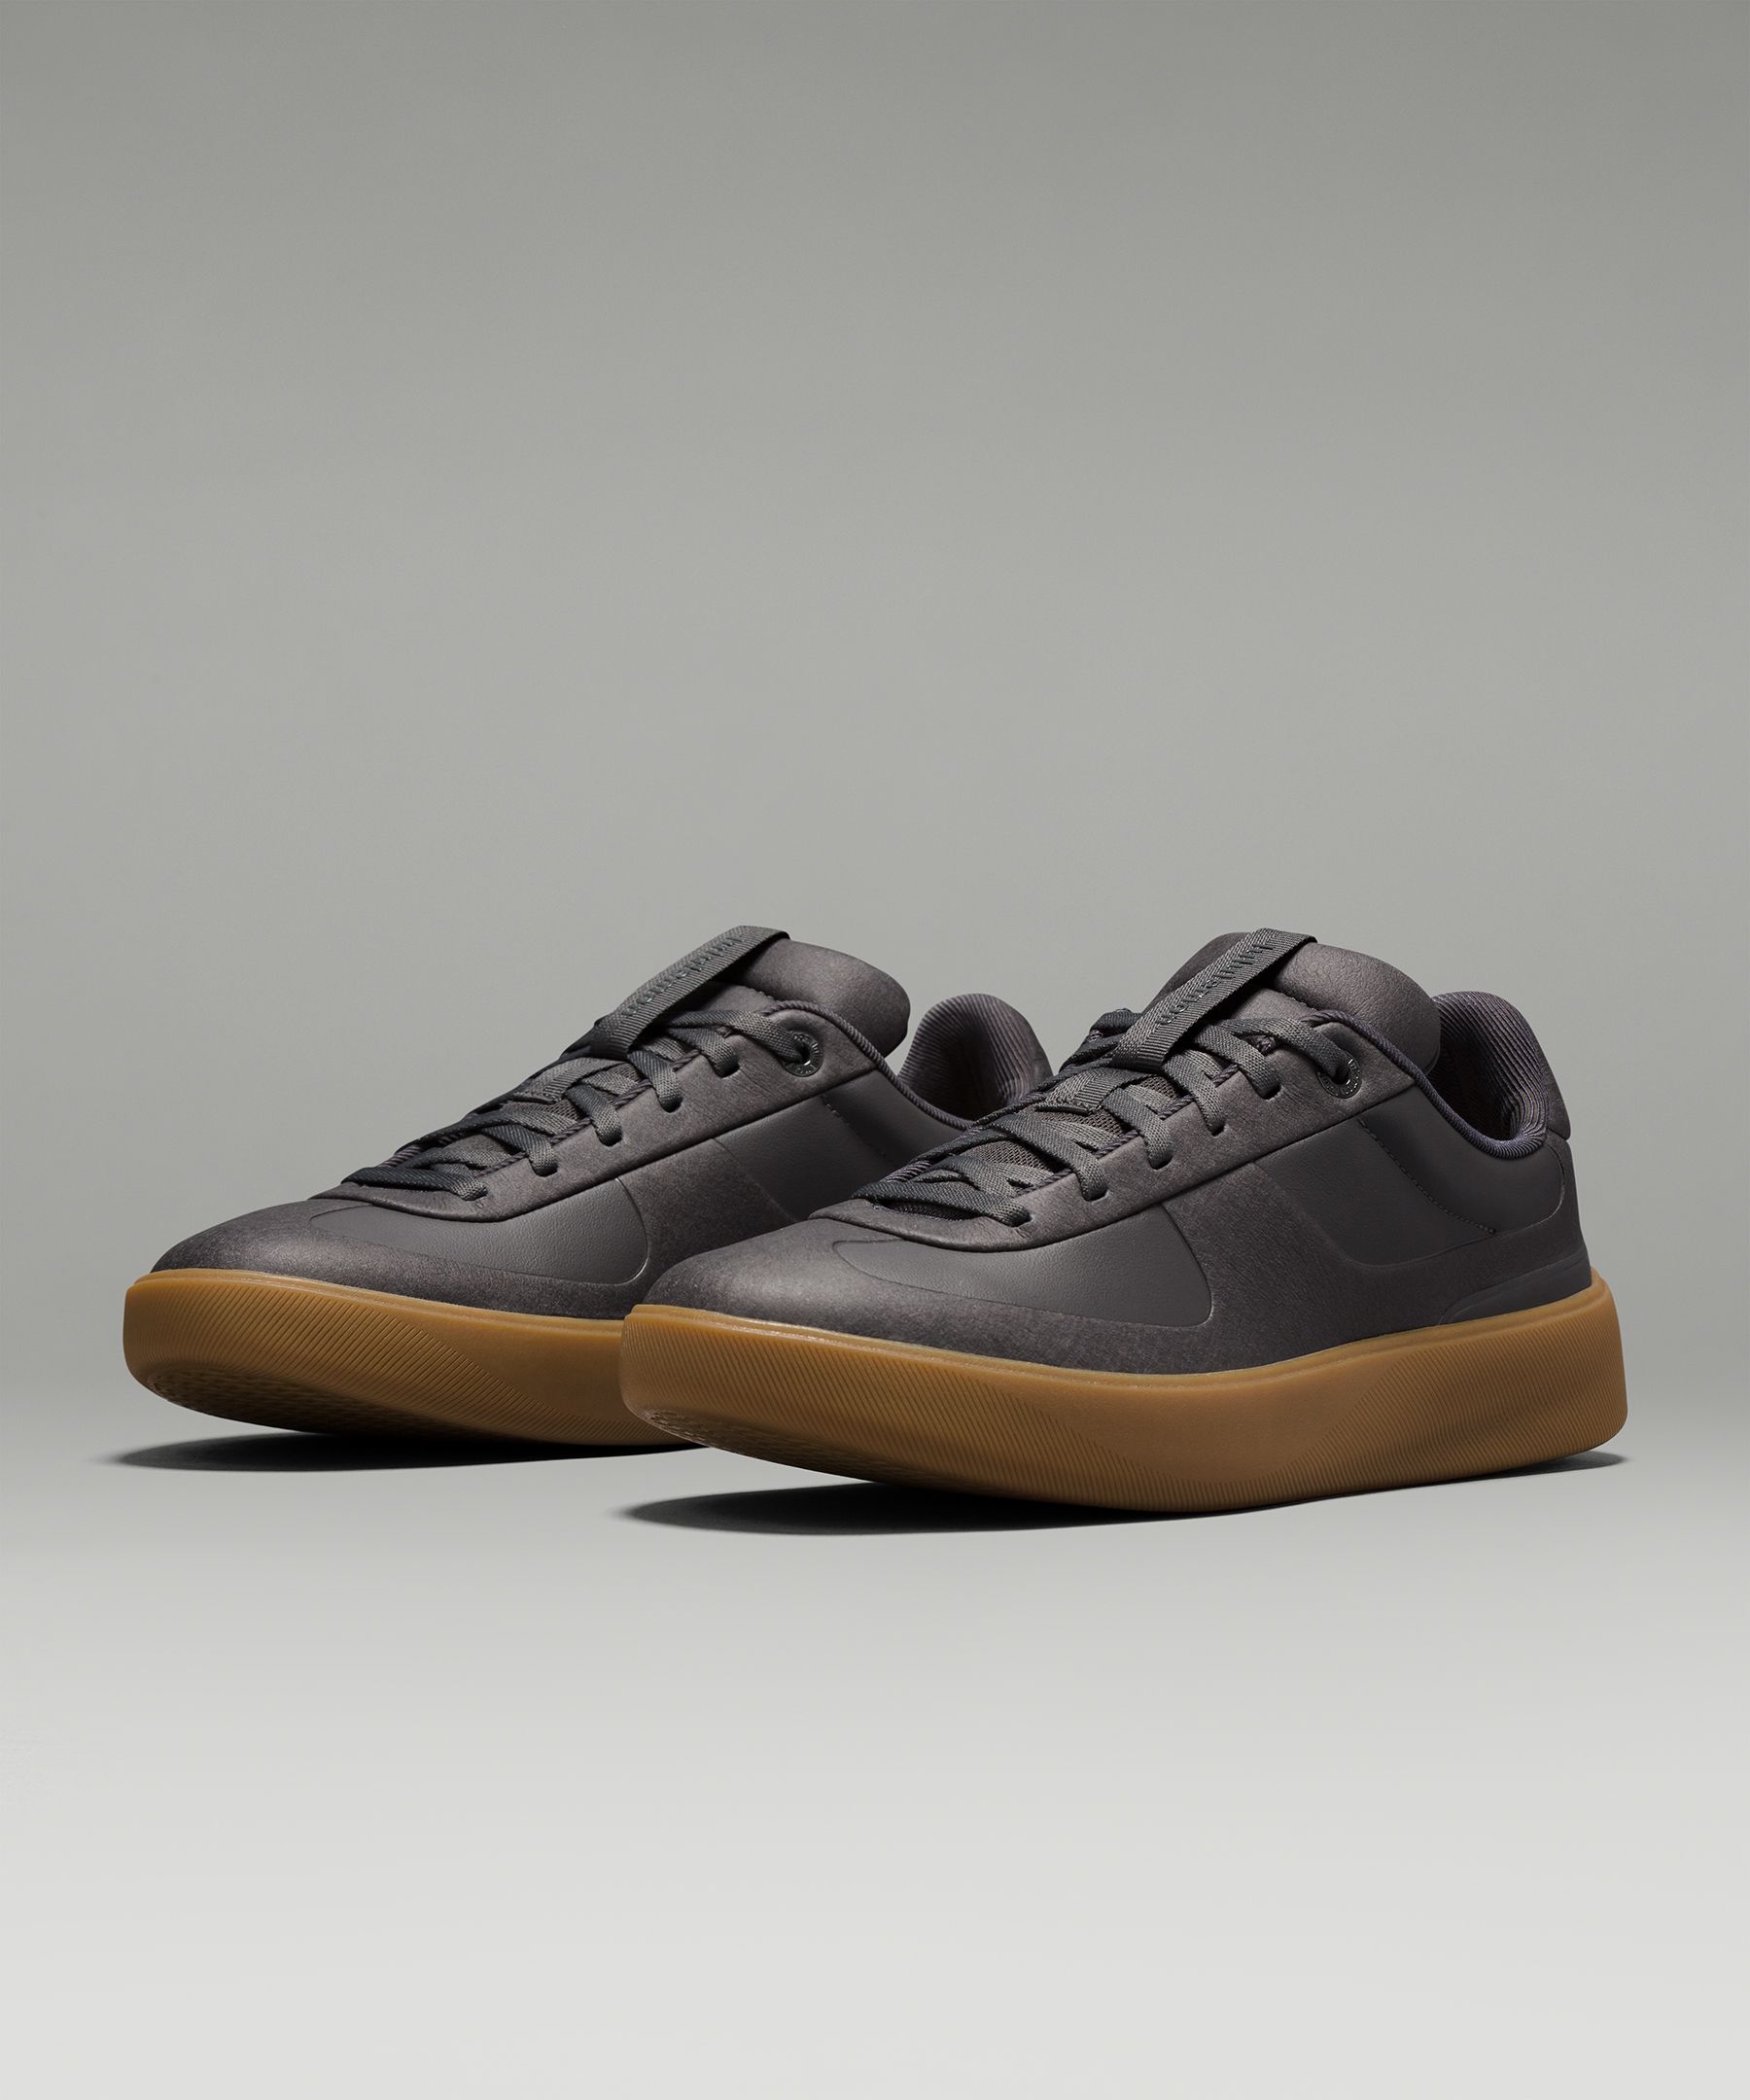 lululemon drops its first shoe for men: Meet the Cityverse Sneaker